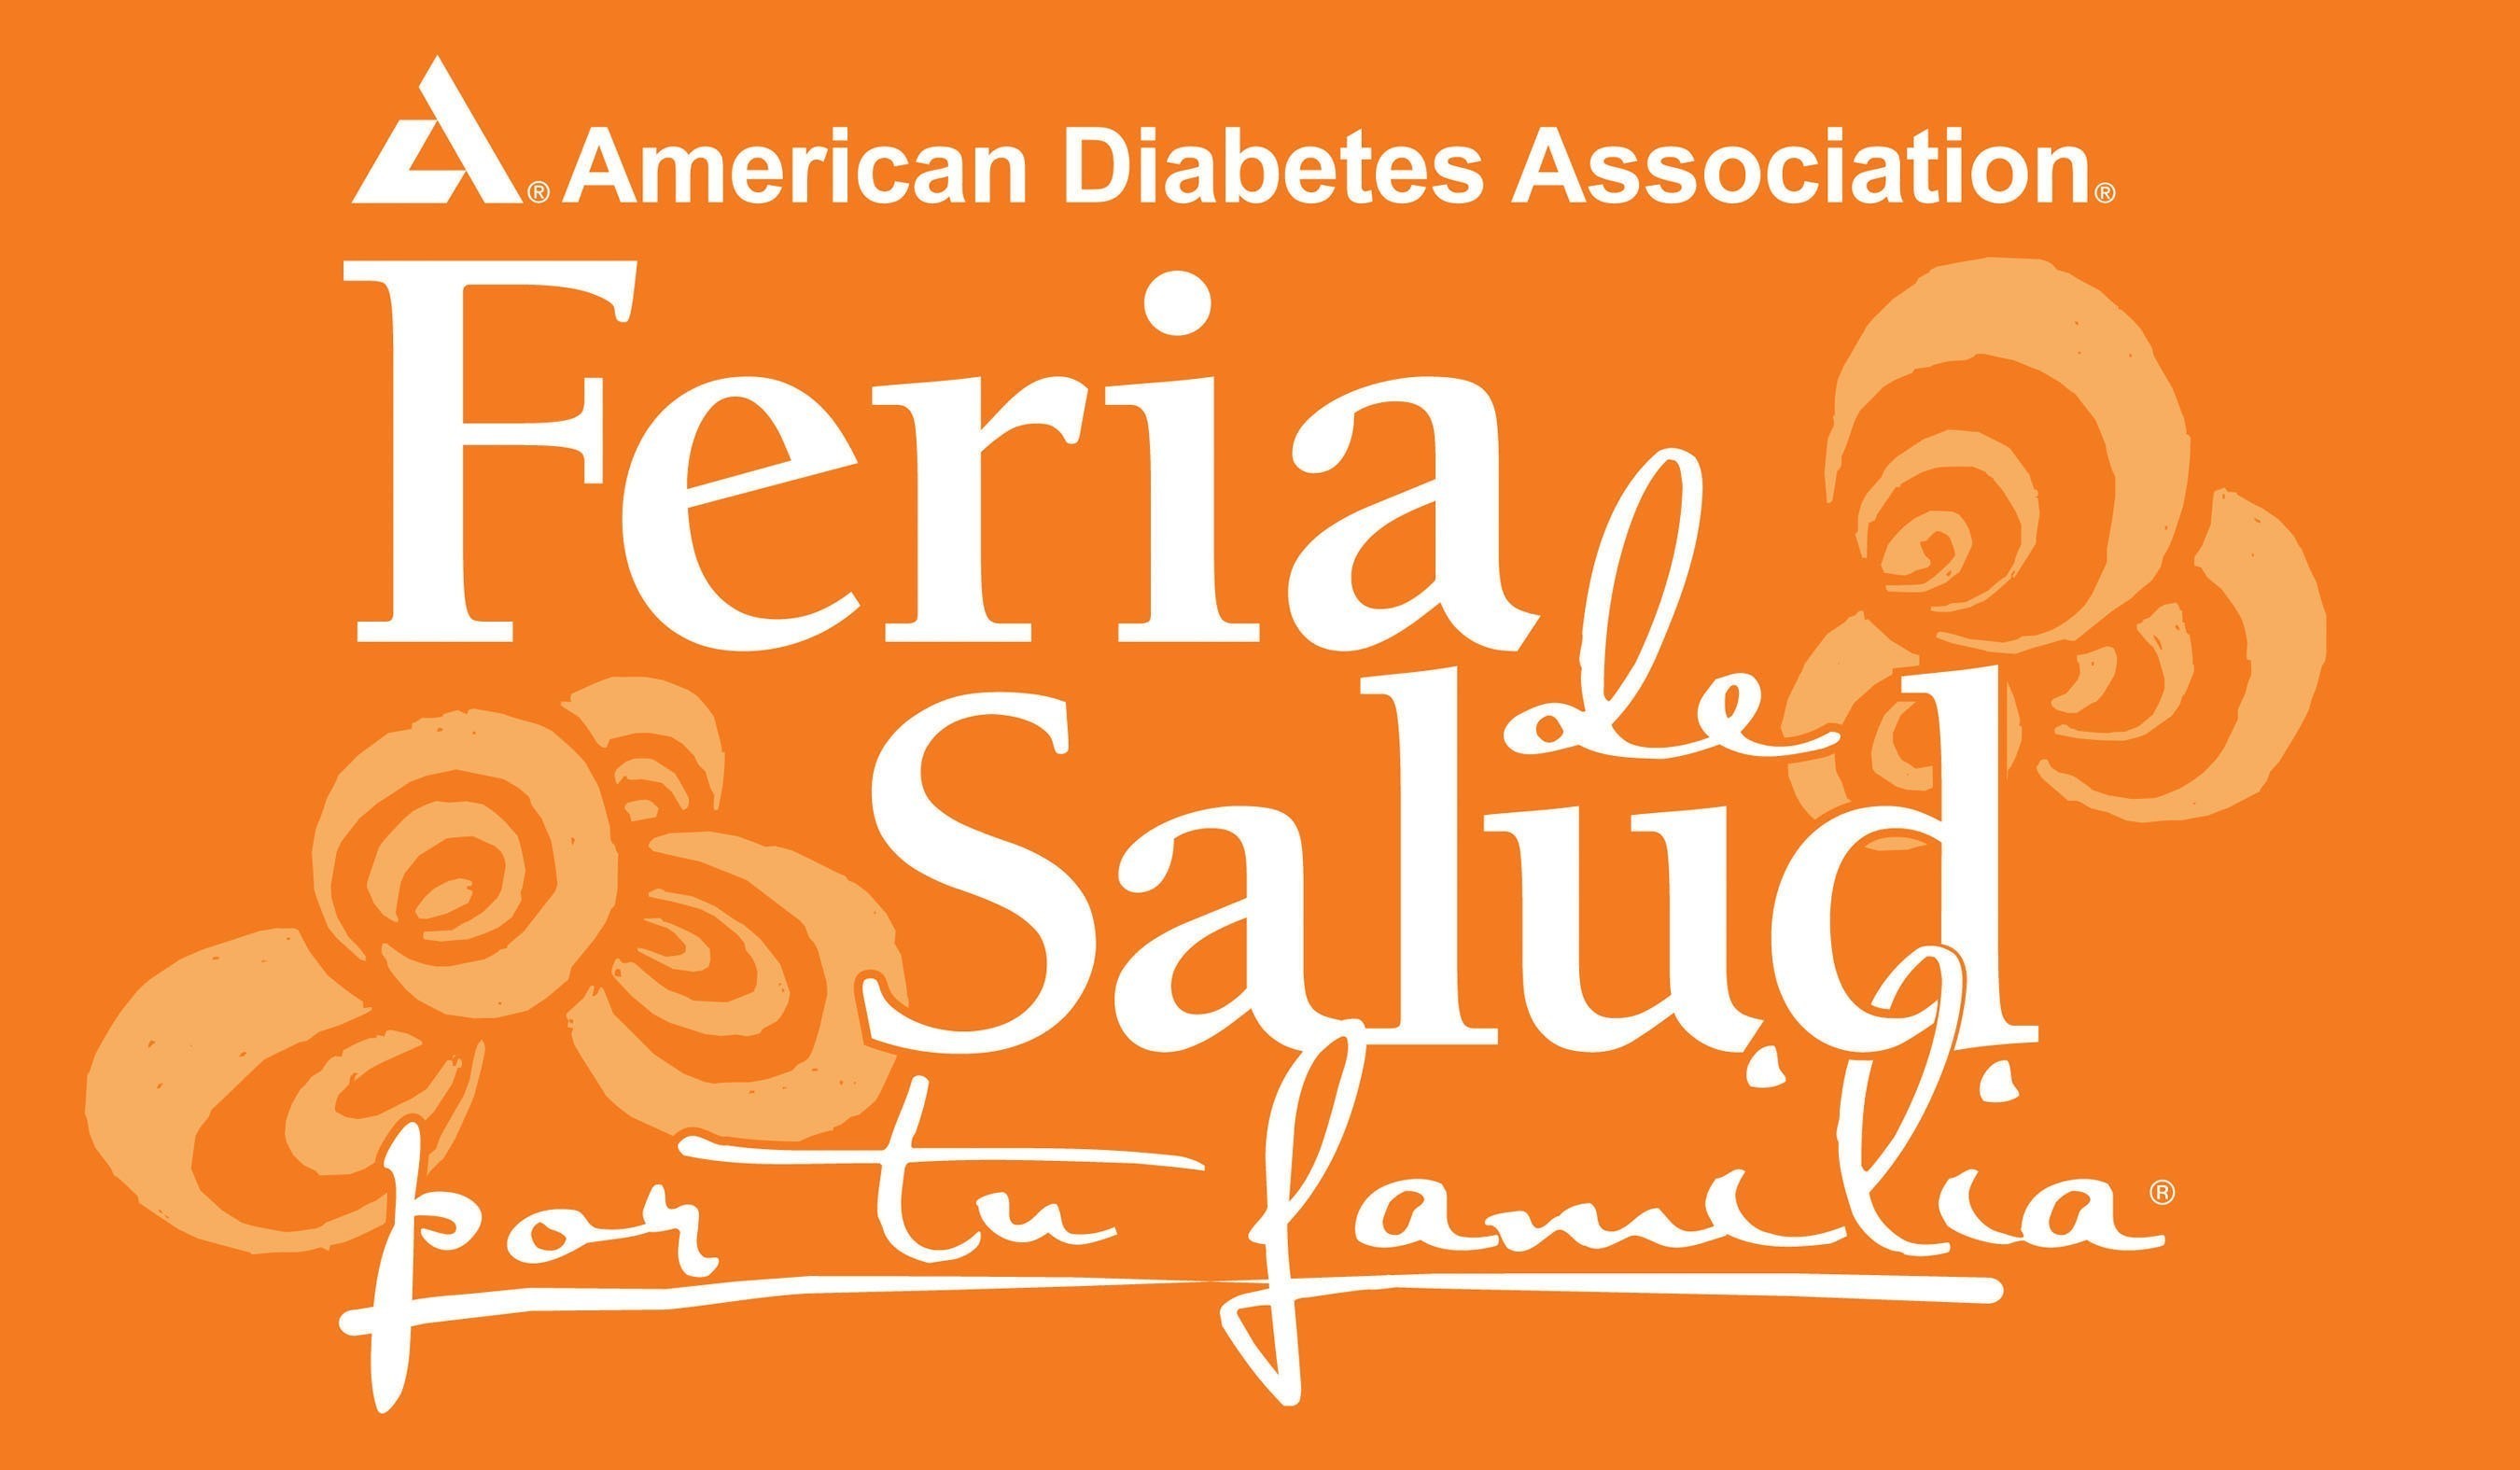 American Diabetes Association's (ADA) Feria de Salud logo.